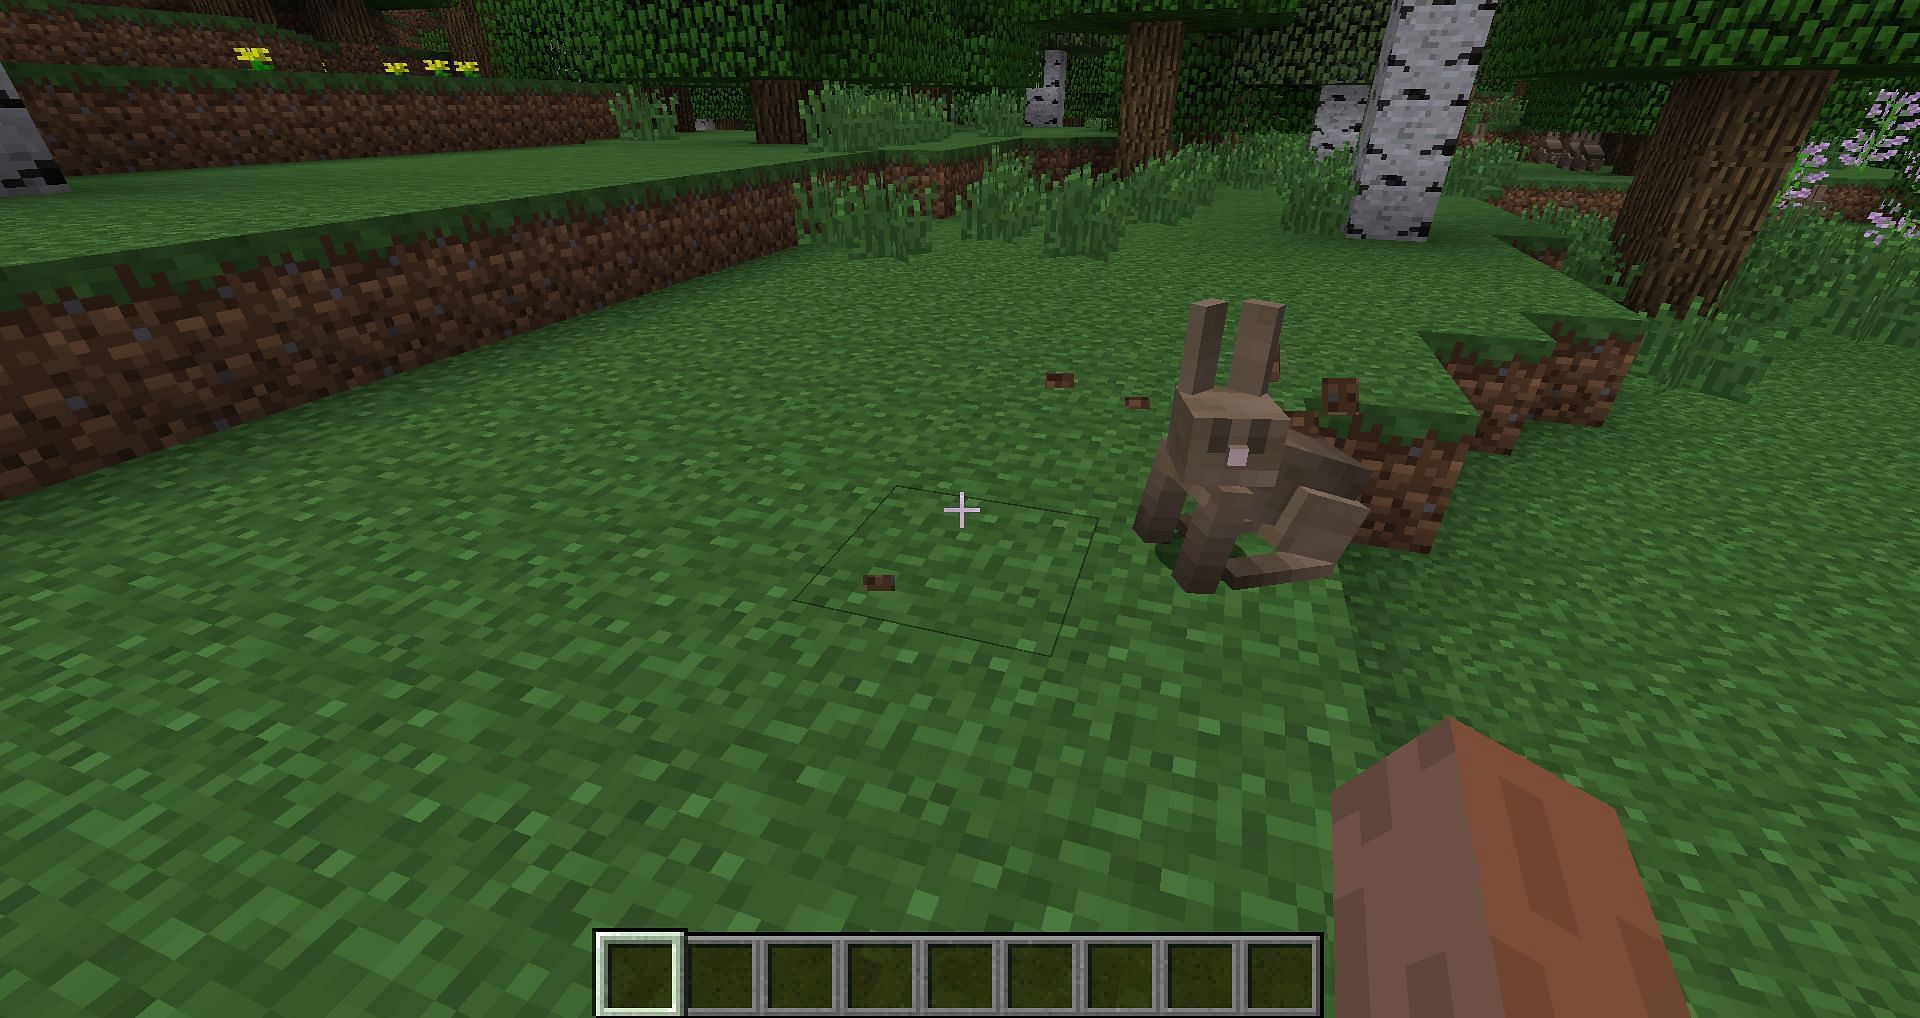 Rabbit (Image via Minecraft Wiki)